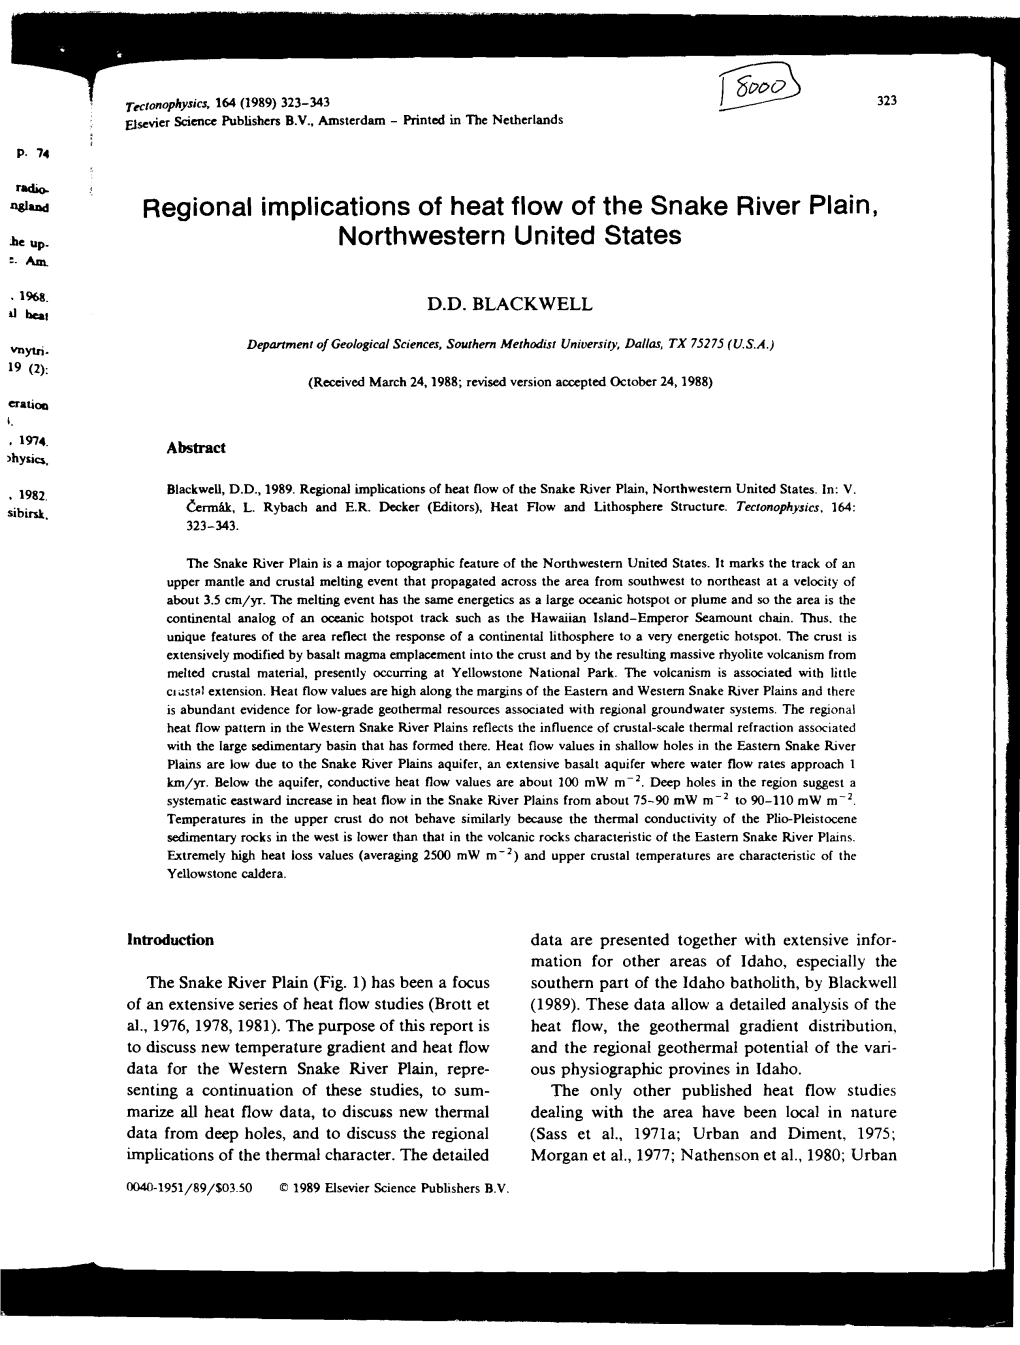 Regional Implications of Heat Flow of the Snake River Plain, Northwestern United States